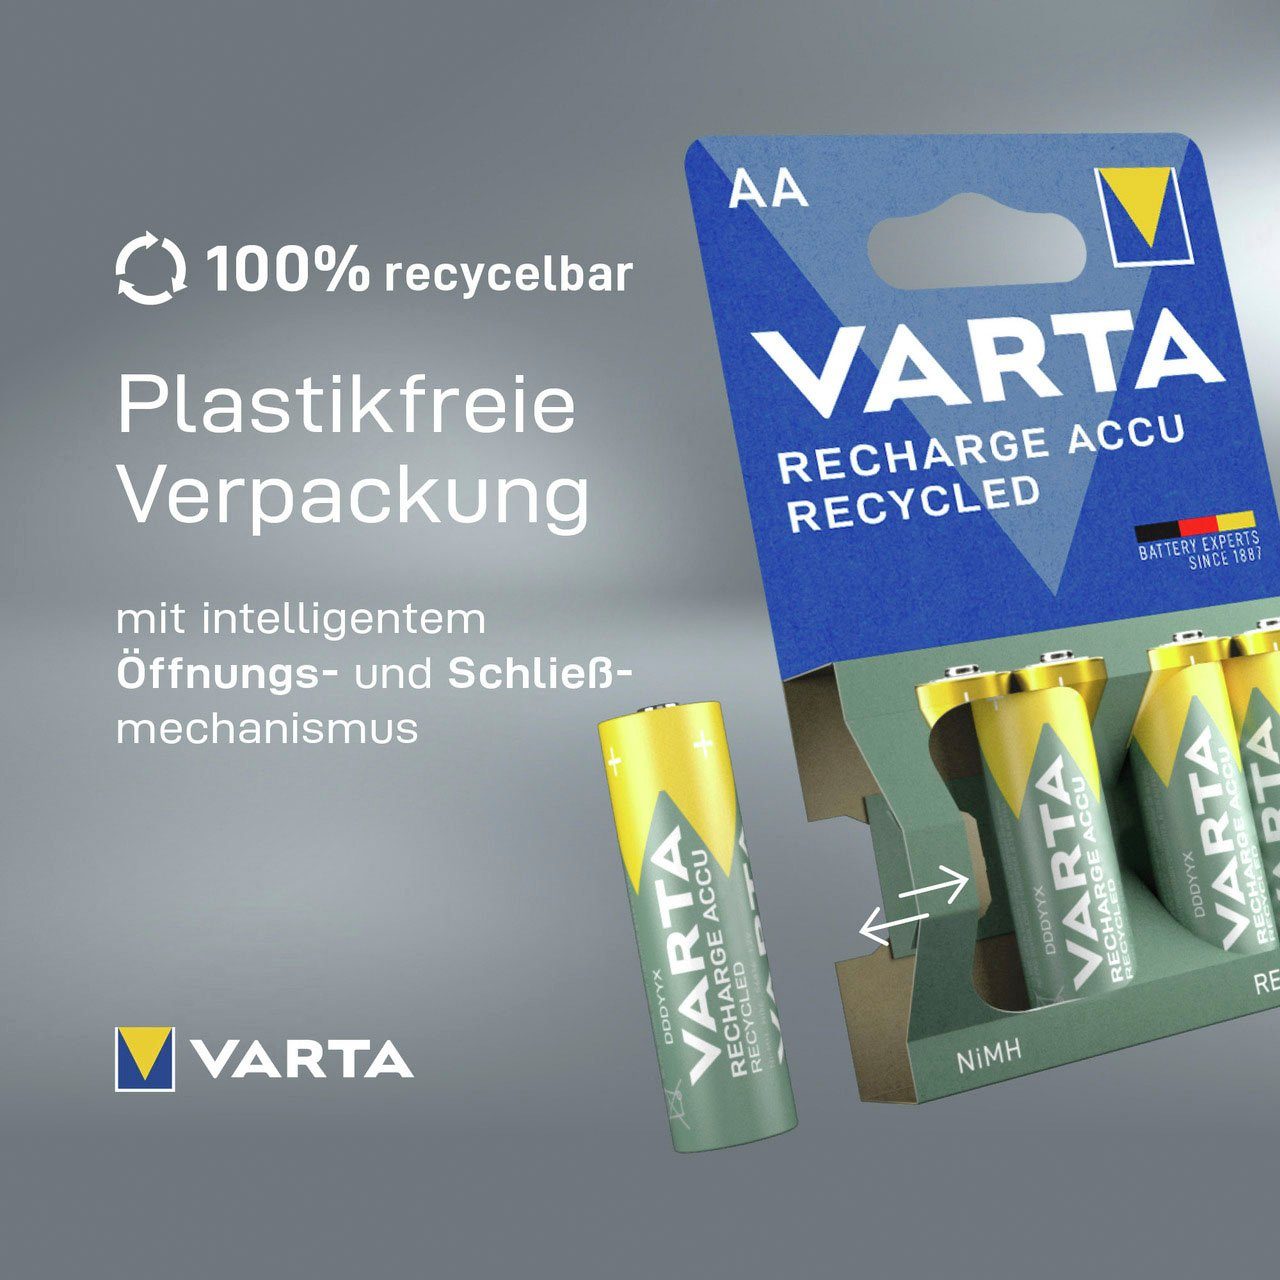 VARTA wiederauflaudbare Akkus Akku (1,2 St), Recycled V, Recharge wiederaufladbar Micro mAh 800 VARTA Accu 4